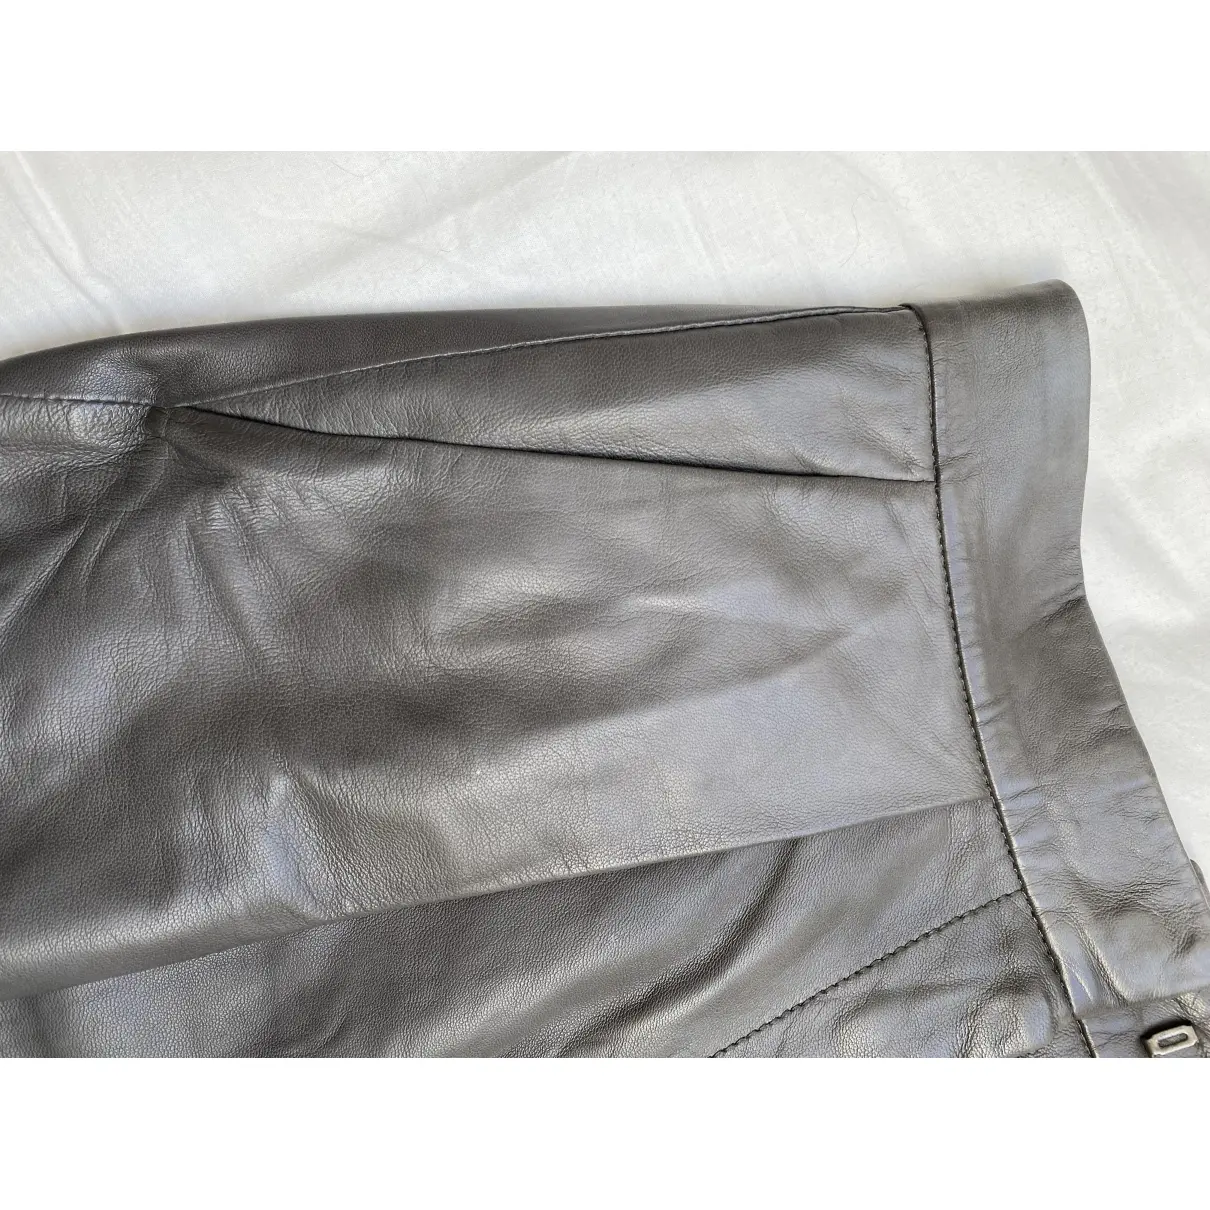 Buy Joseph Leather large pants online